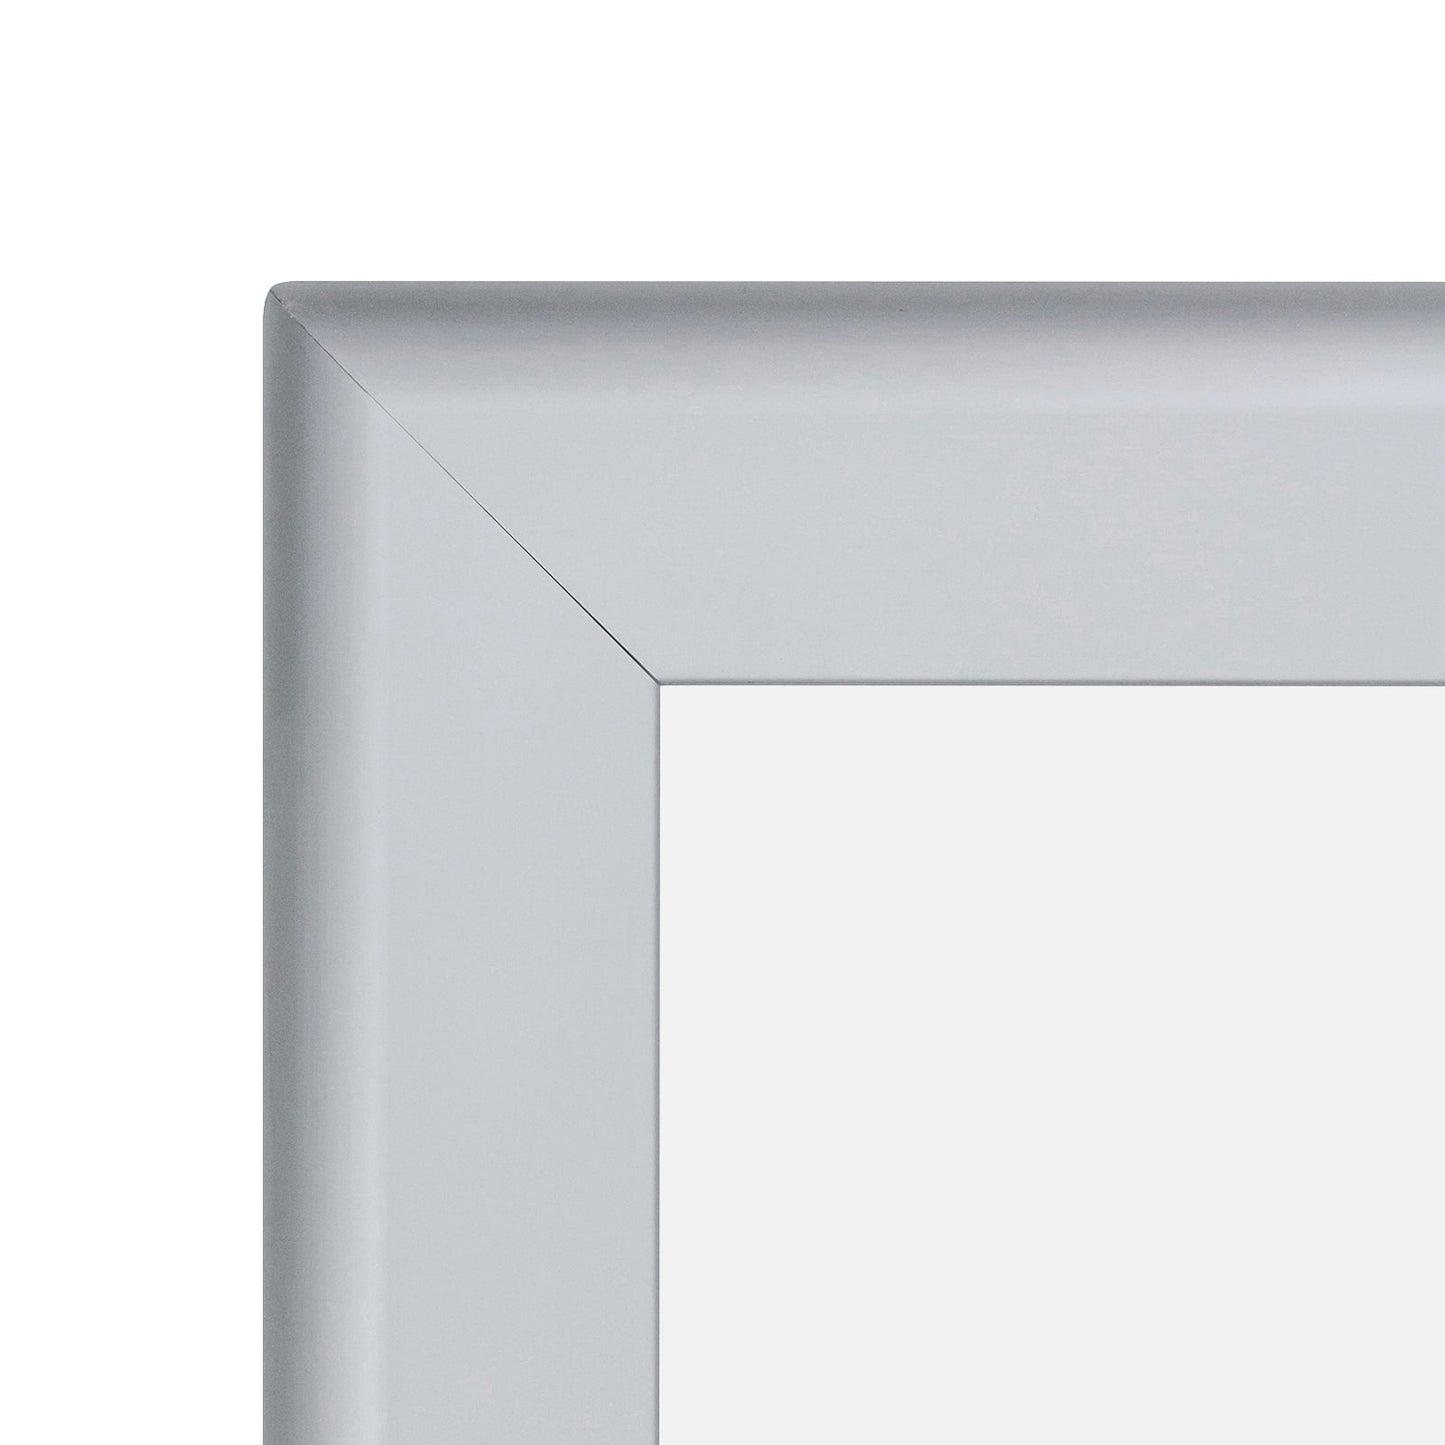 36x37 Silver SnapeZo® Snap Frame - 1.7" Profile - Snap Frames Direct